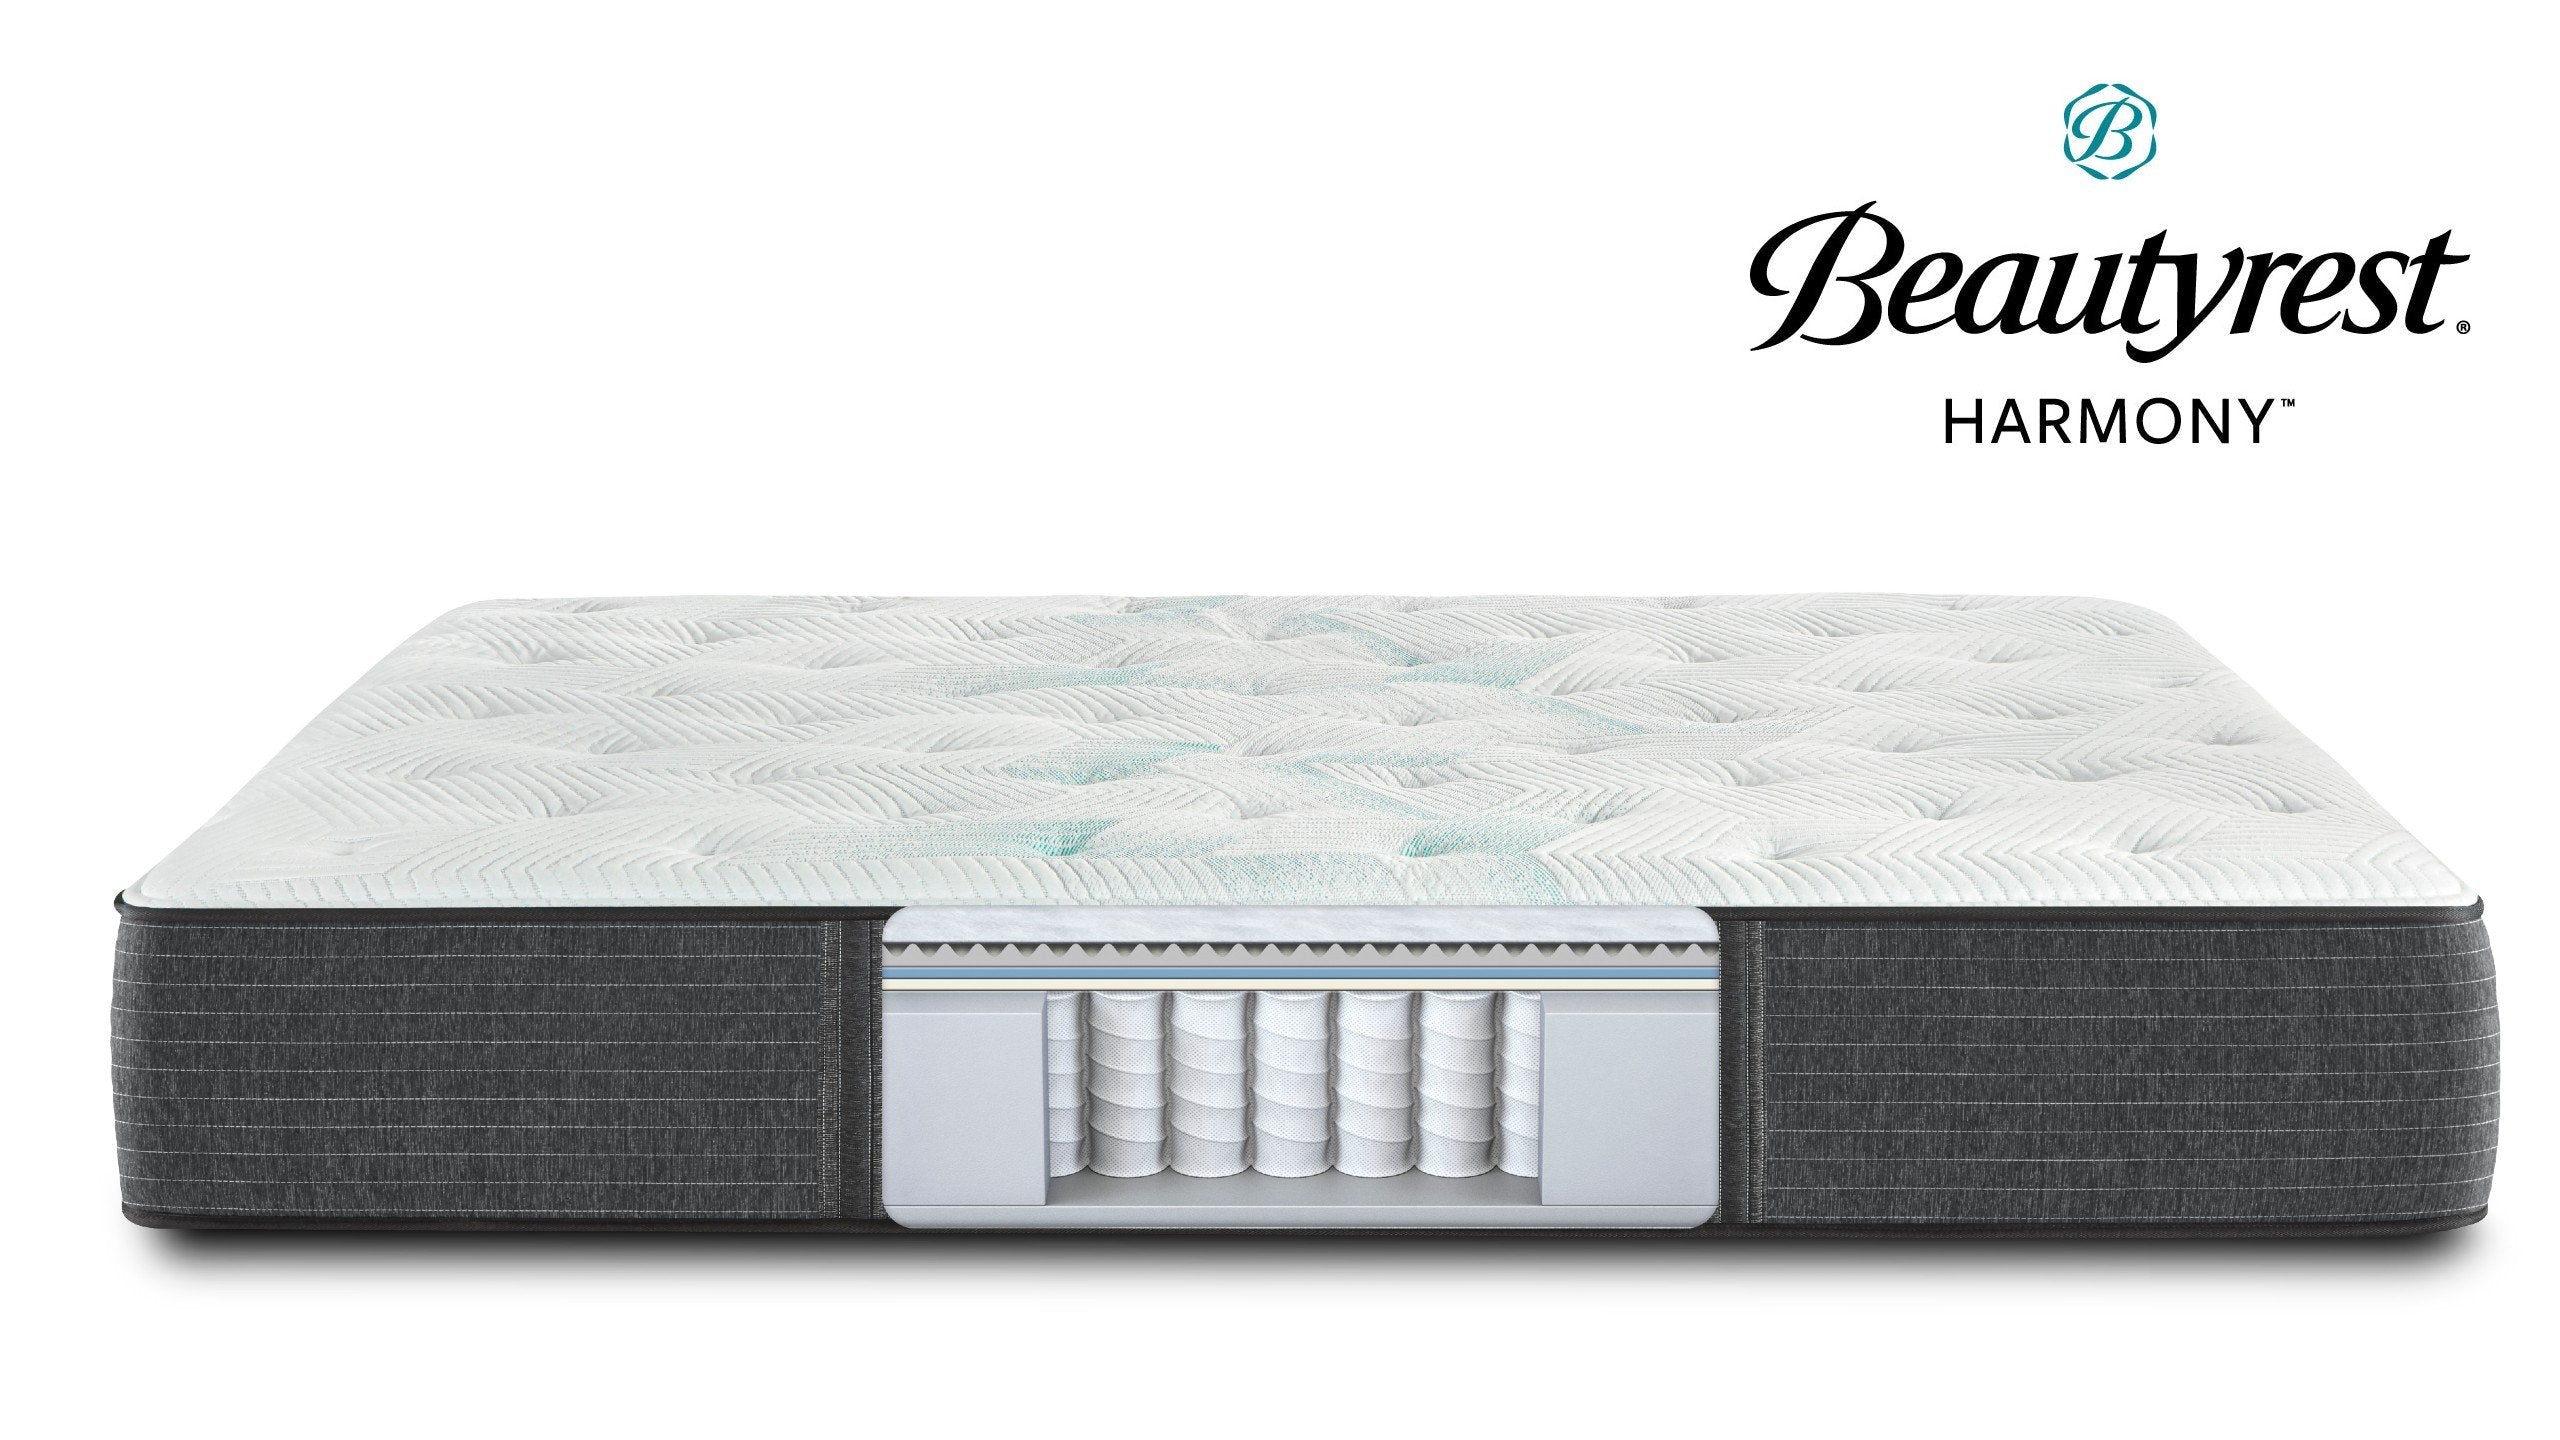 Demo Beautyrest Harmony Split King Adjustable Bed Package